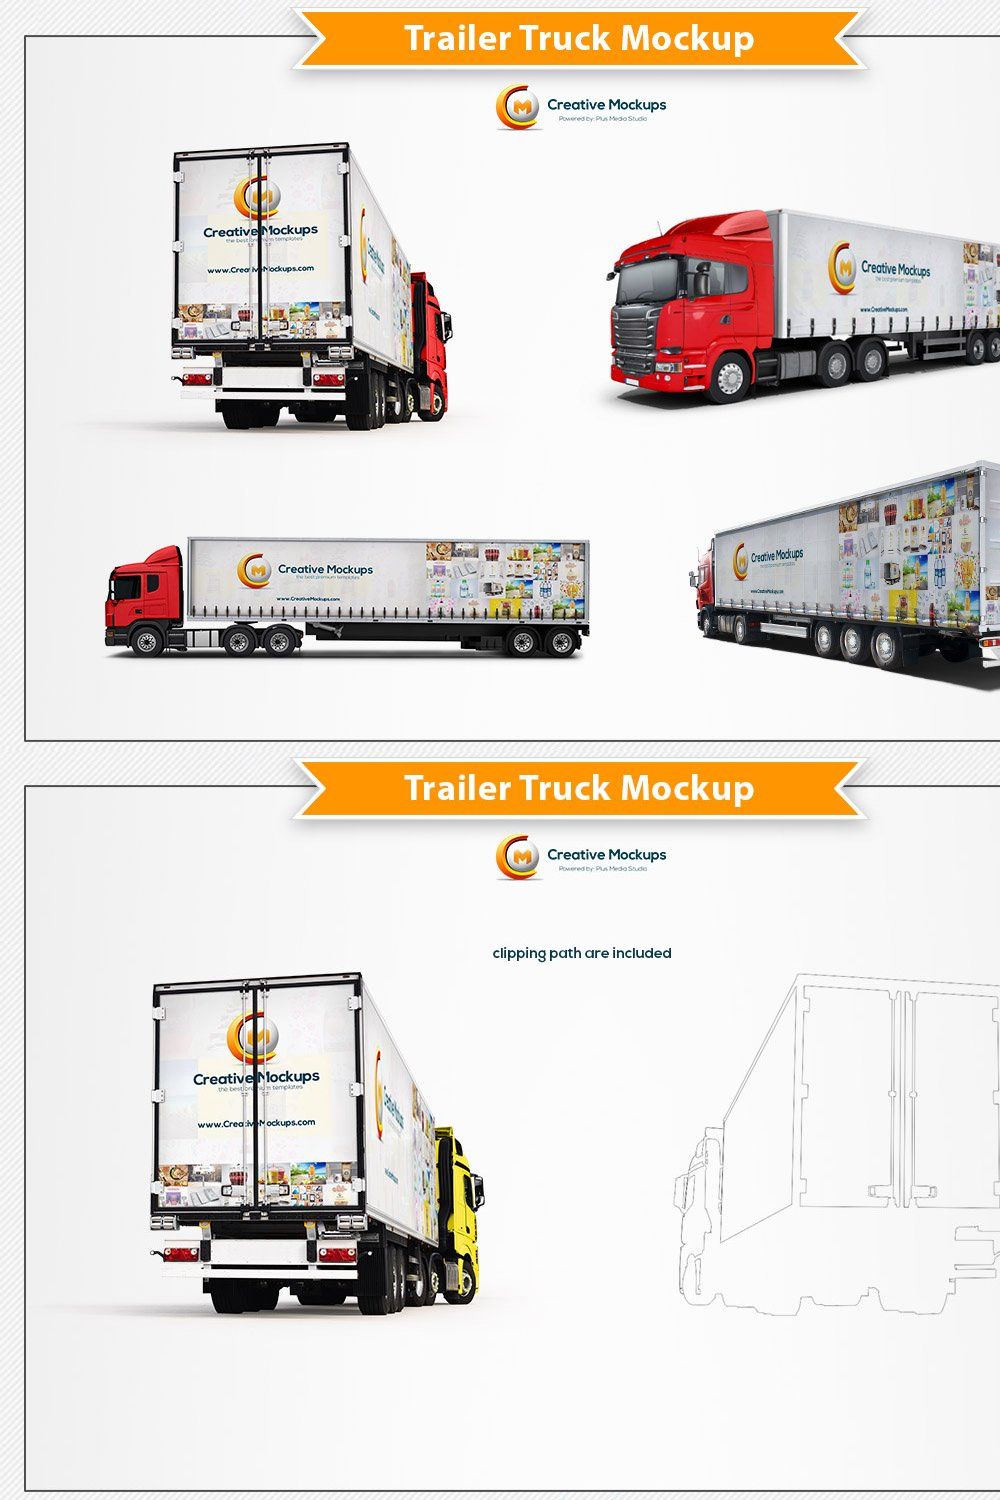 Trailer Truck Mockup pinterest preview image.